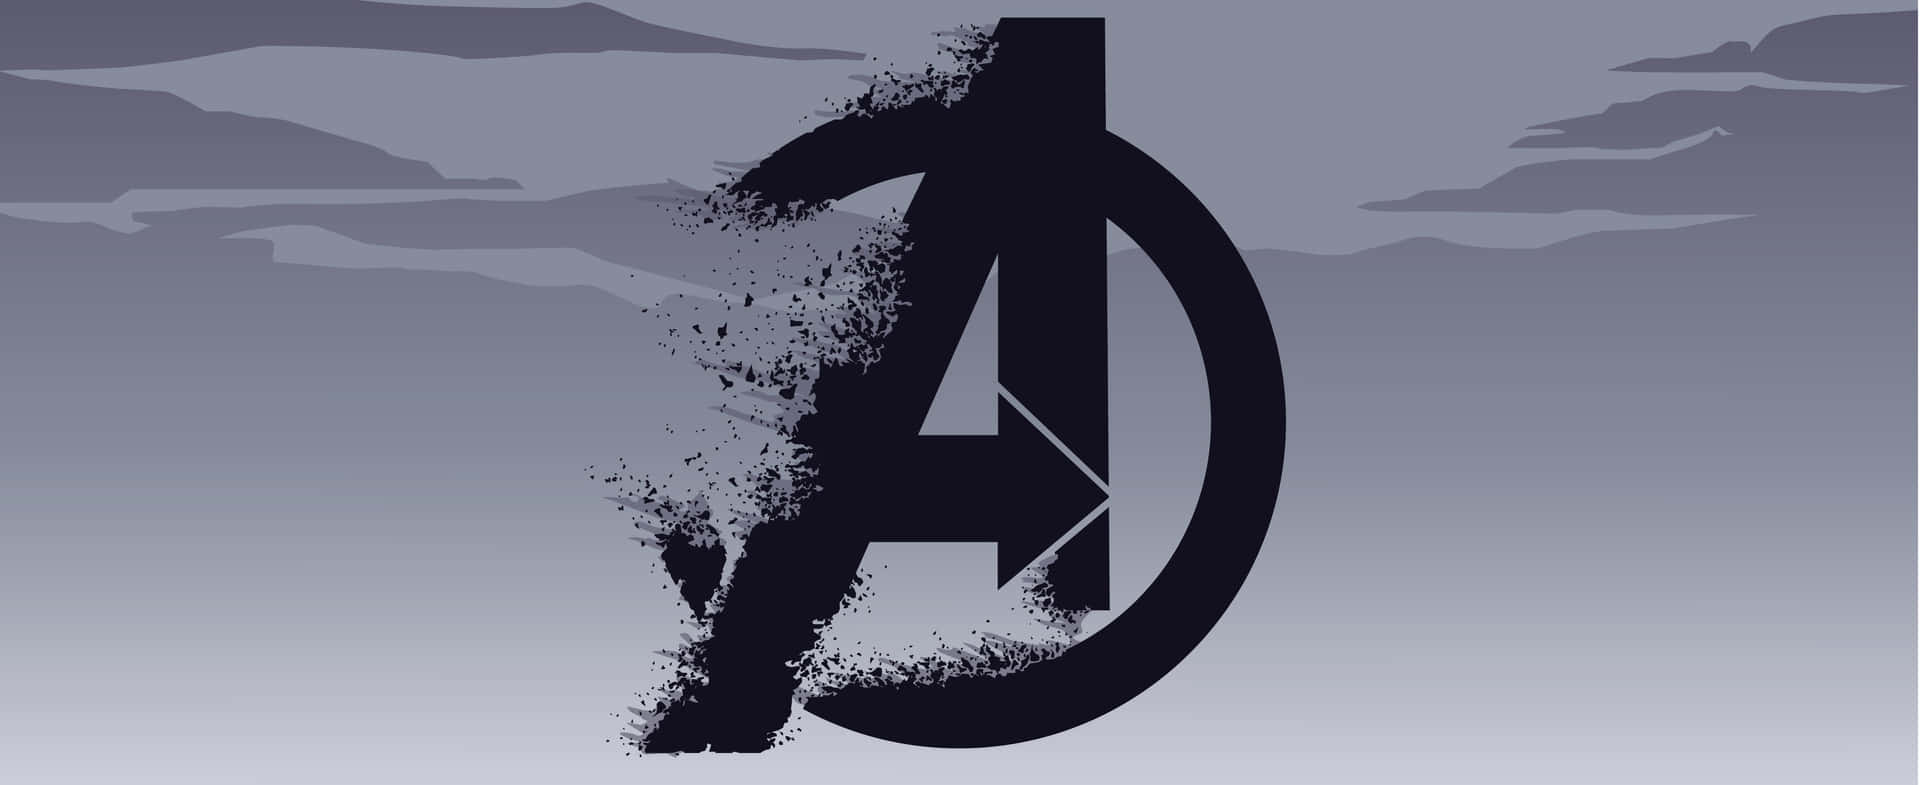 Avengers Logo Disintegration Effect Wallpaper